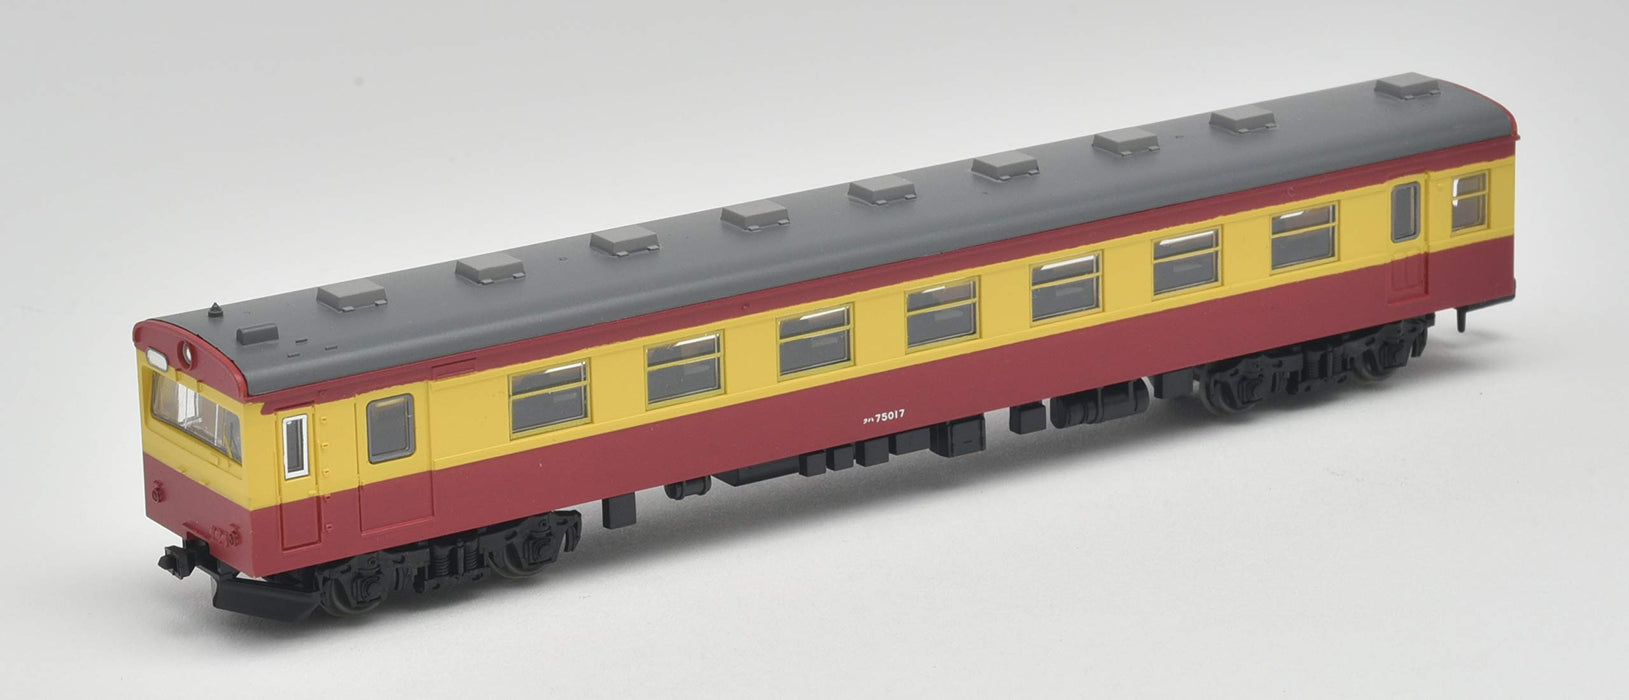 Tomytec JNR 70 Series 6-Car Railway Collection Set Niigata Color - Exclusive Limited Edition